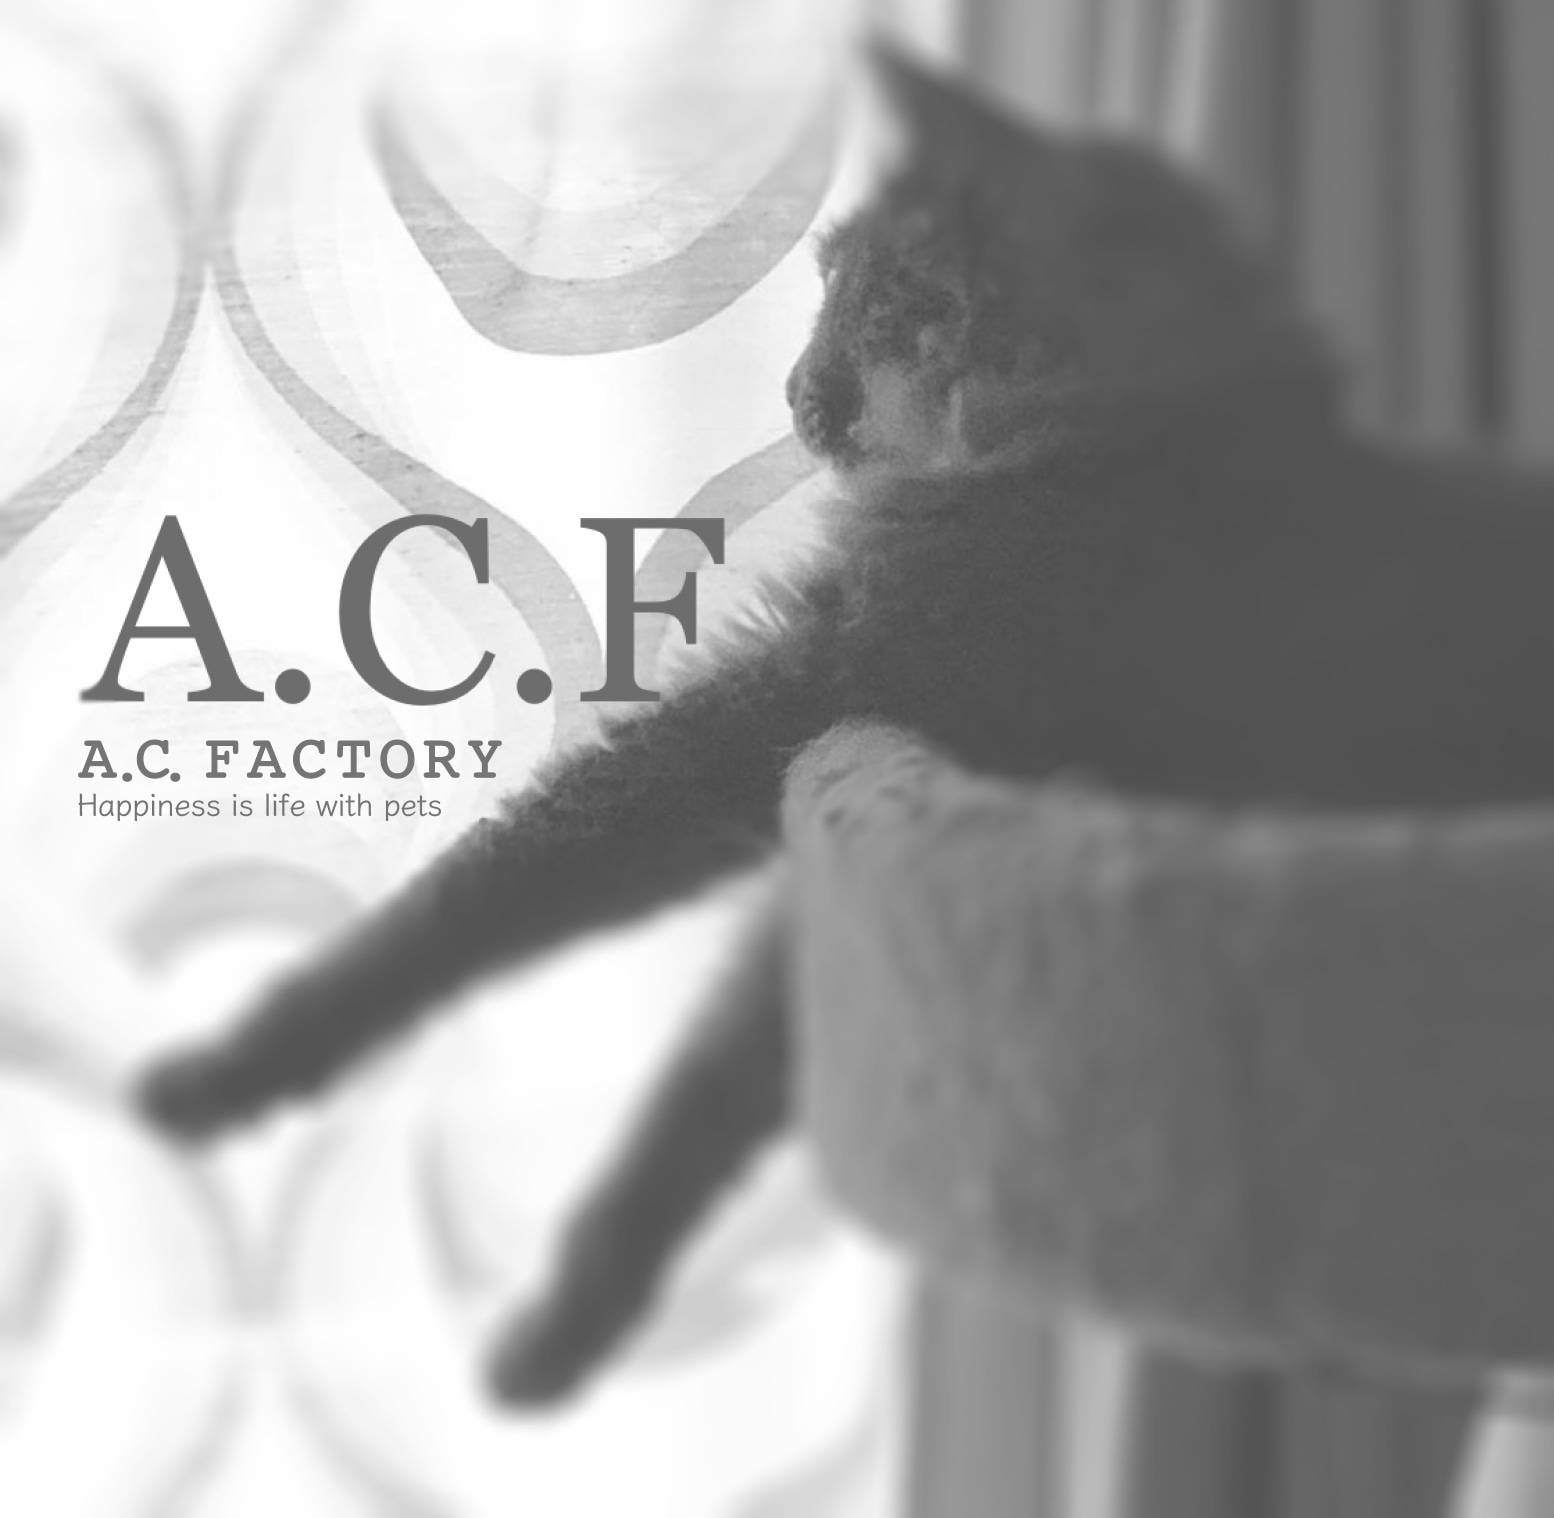 A.C. FACTORY